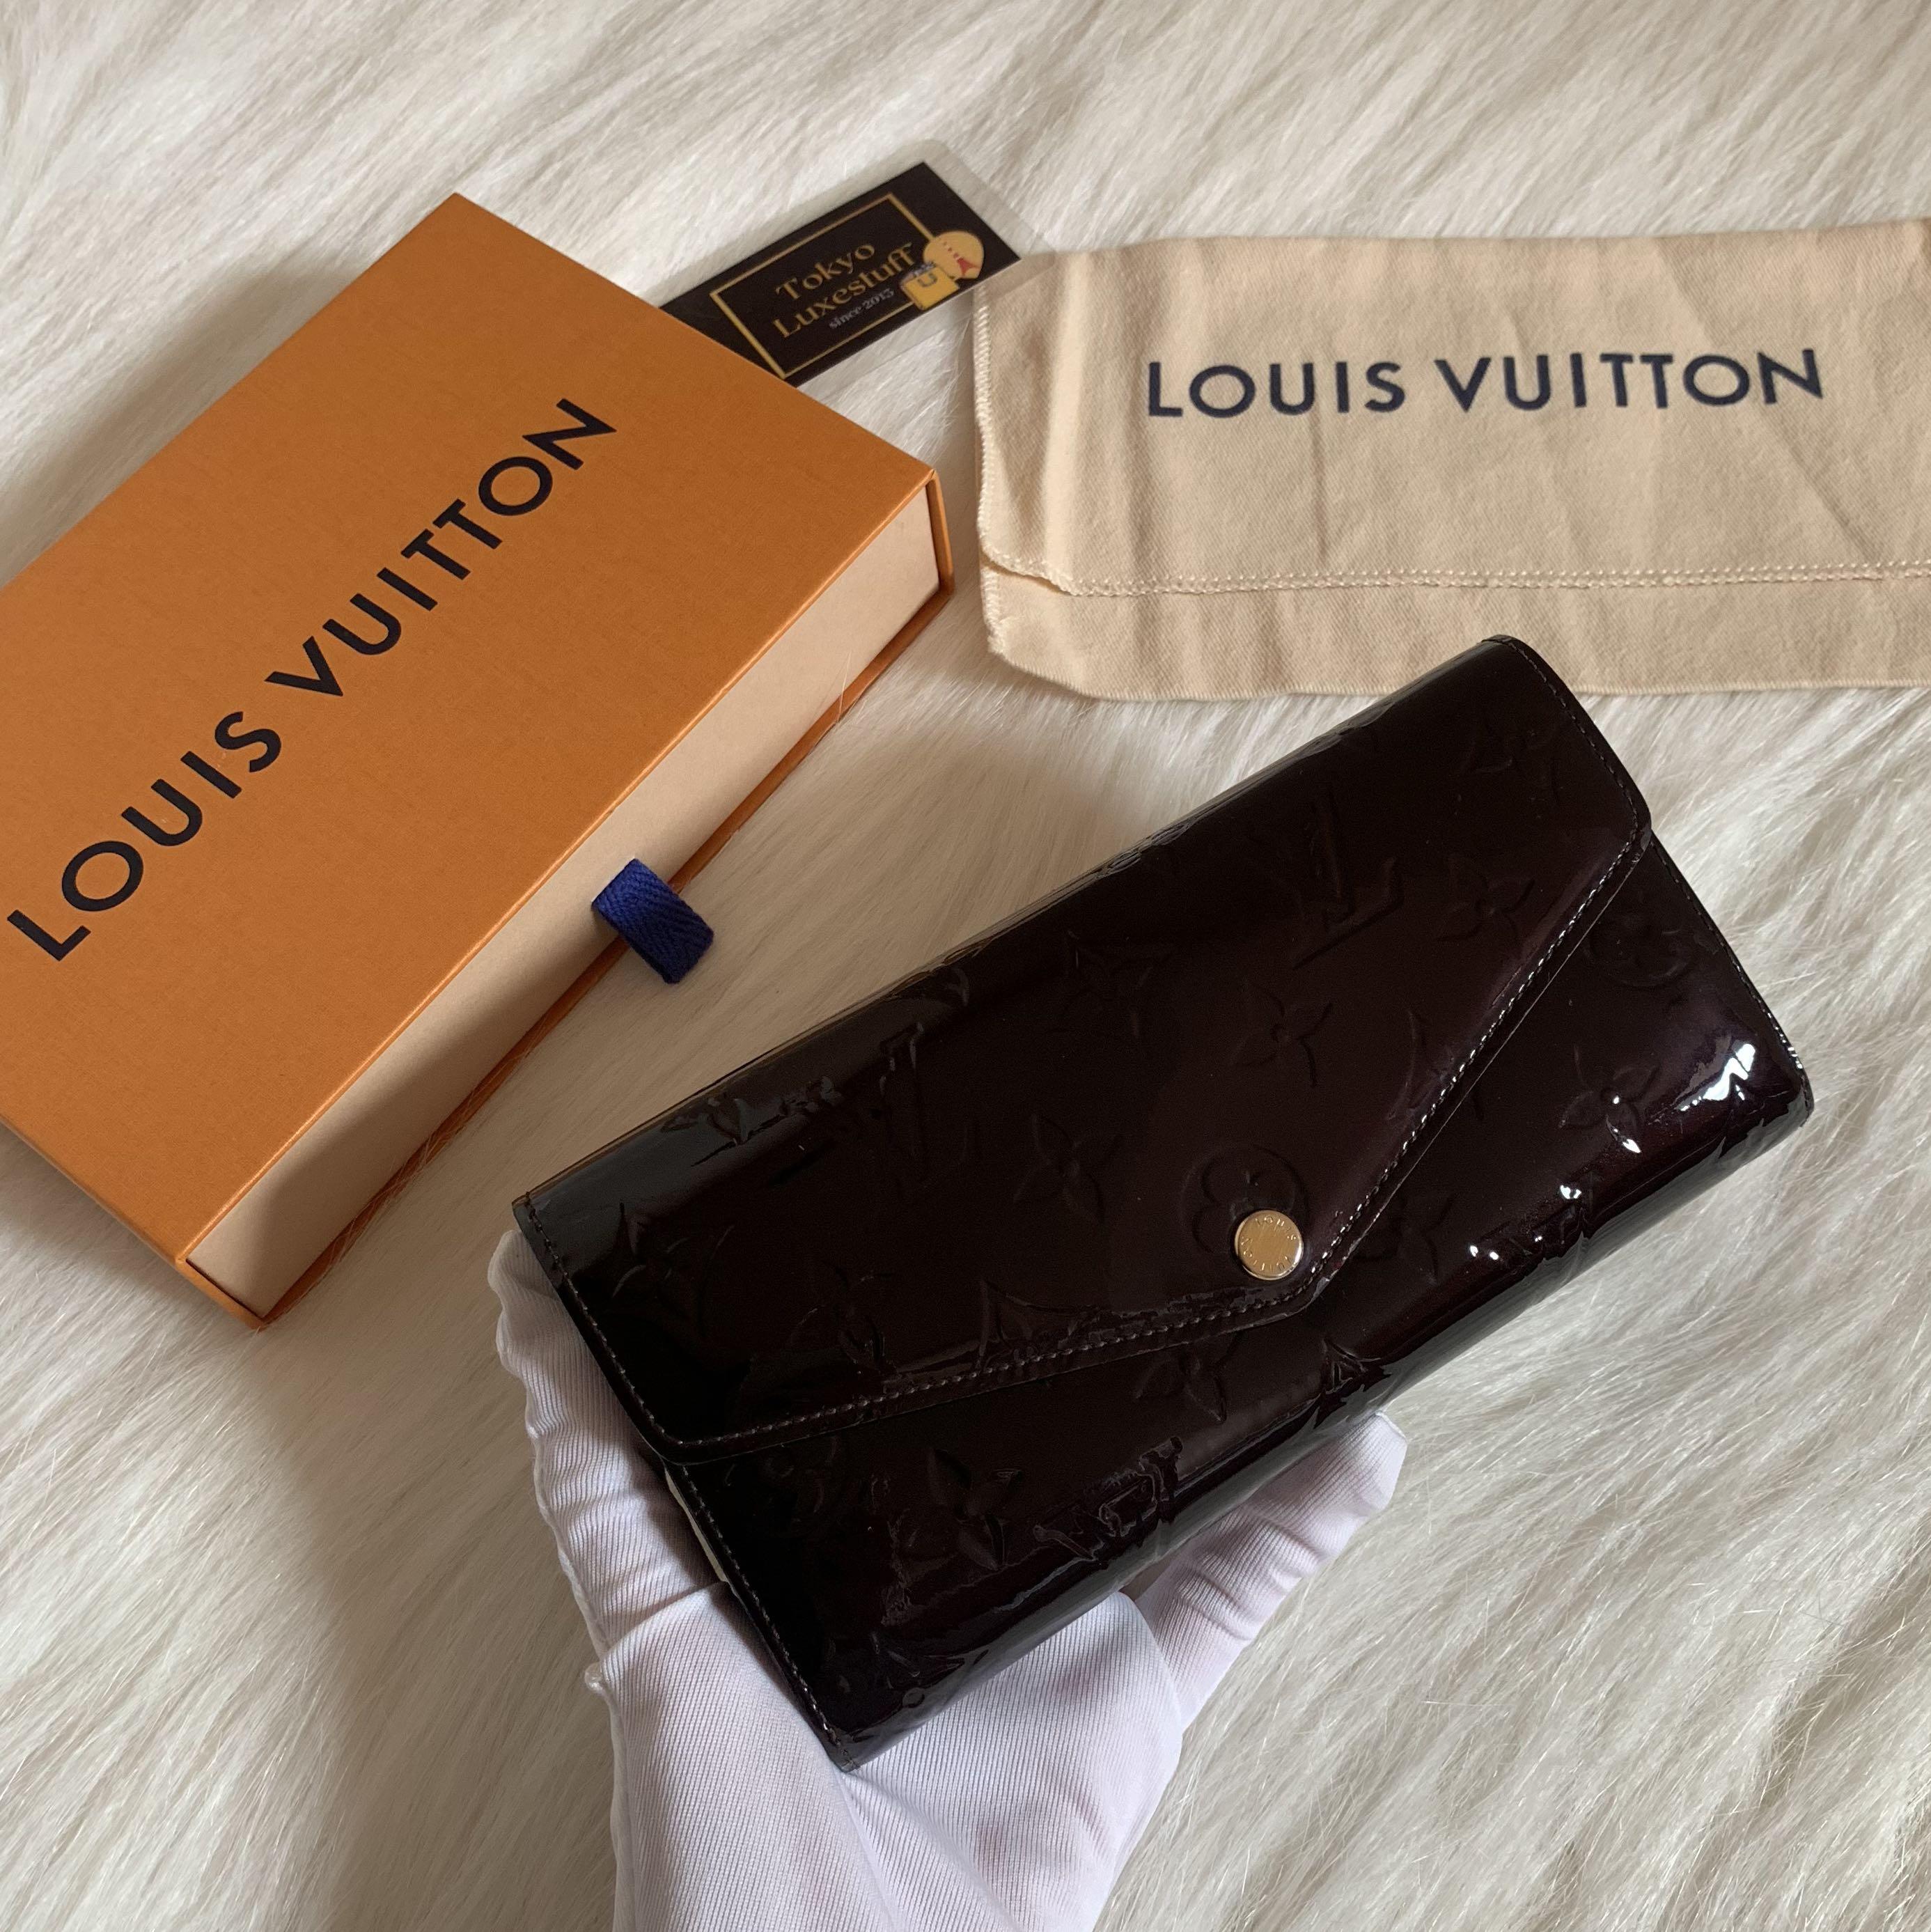 Louis Vuitton Long Wallet Portefeuille Sarah Gray White Damier